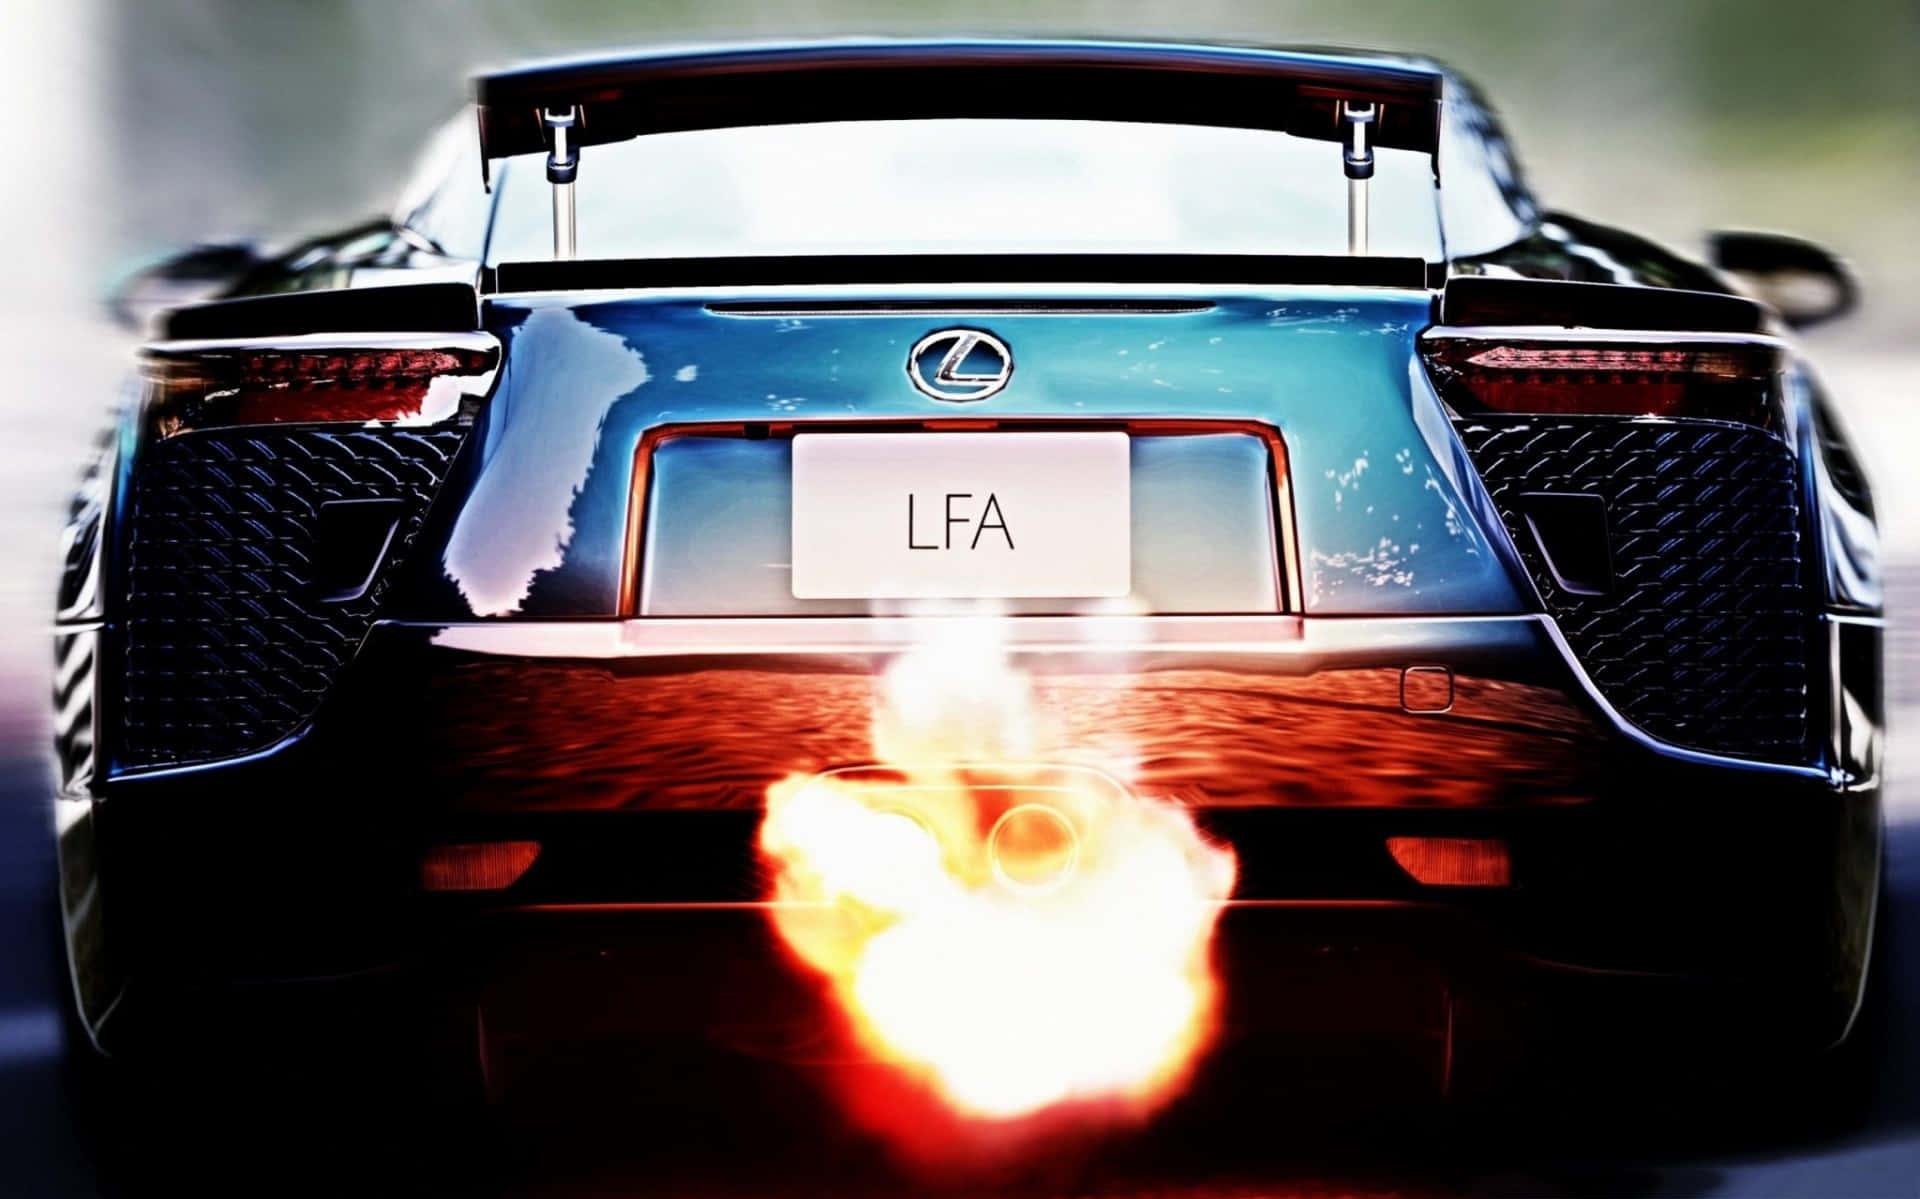 Stunning Lexus Lfa In Motion On A Scenic Road Wallpaper